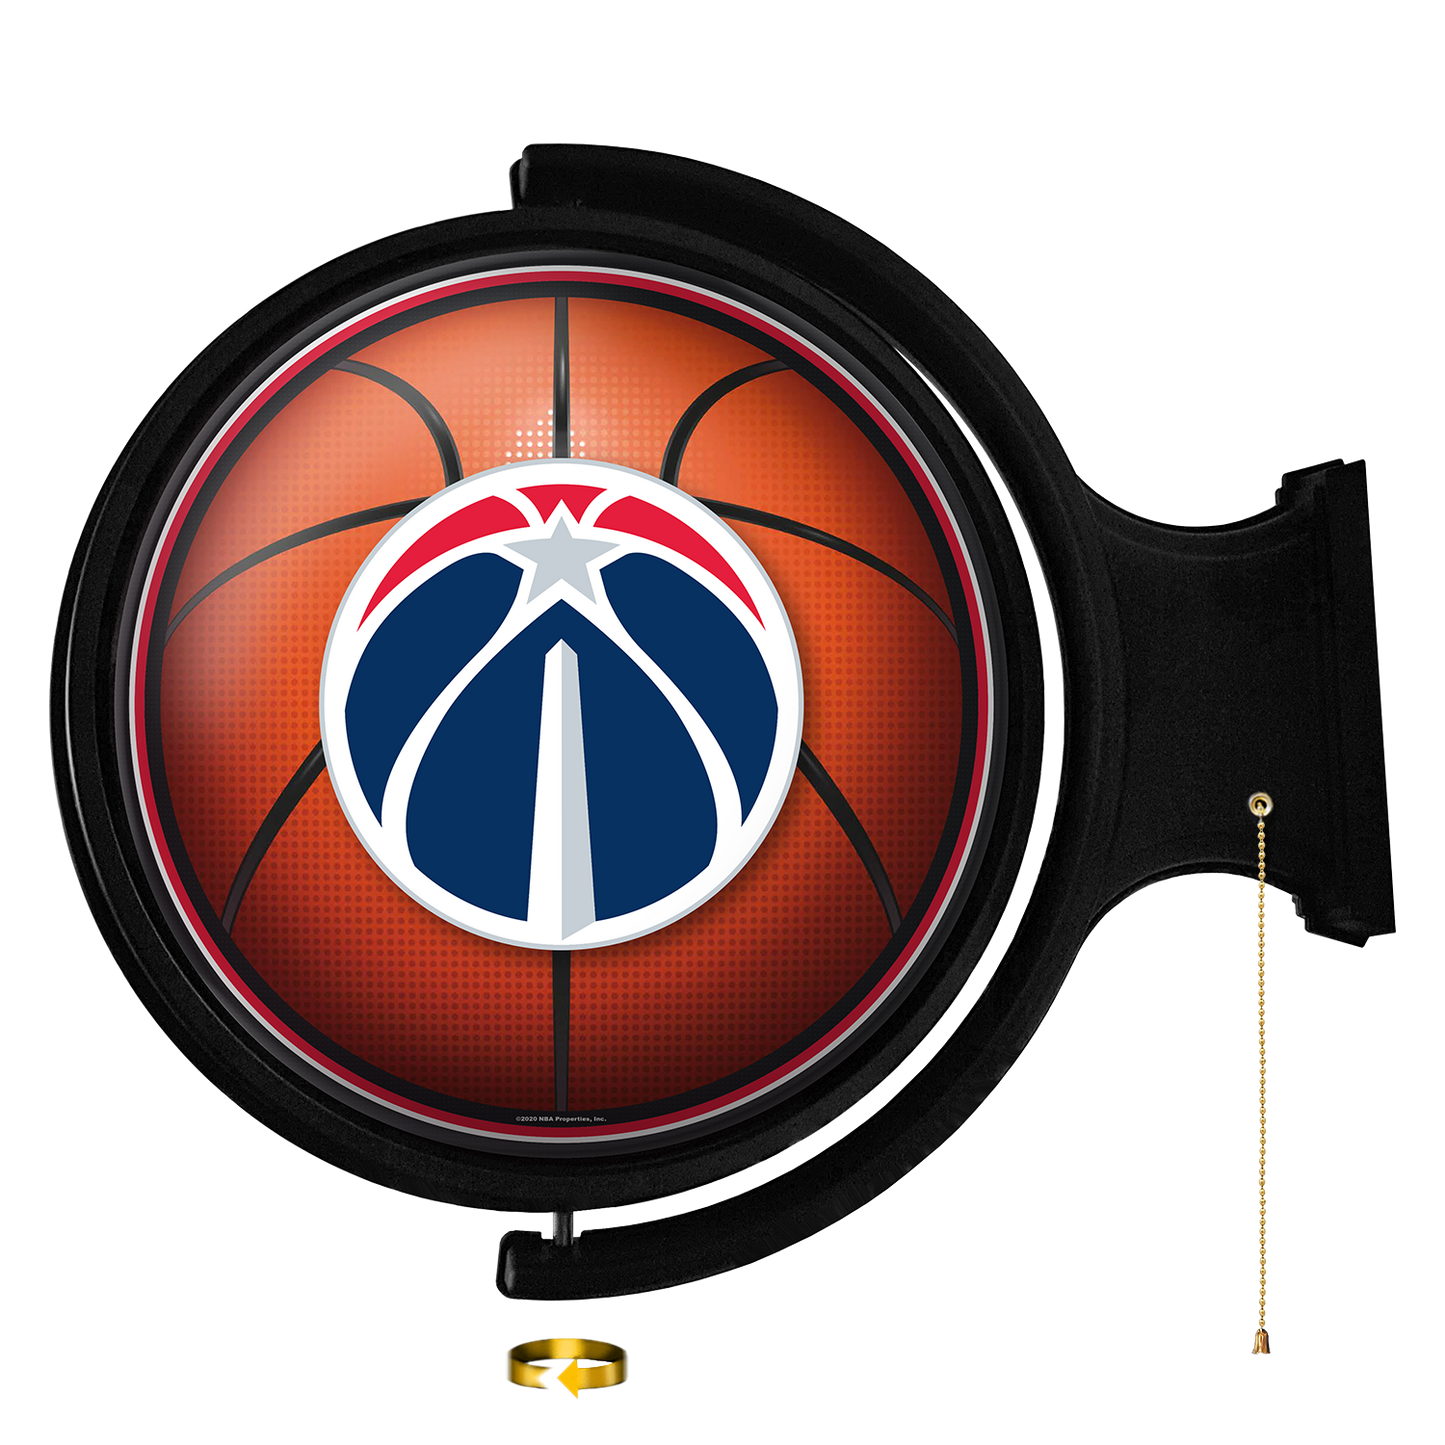 Washington Wizards Round Basketball Rotating Wall Sign